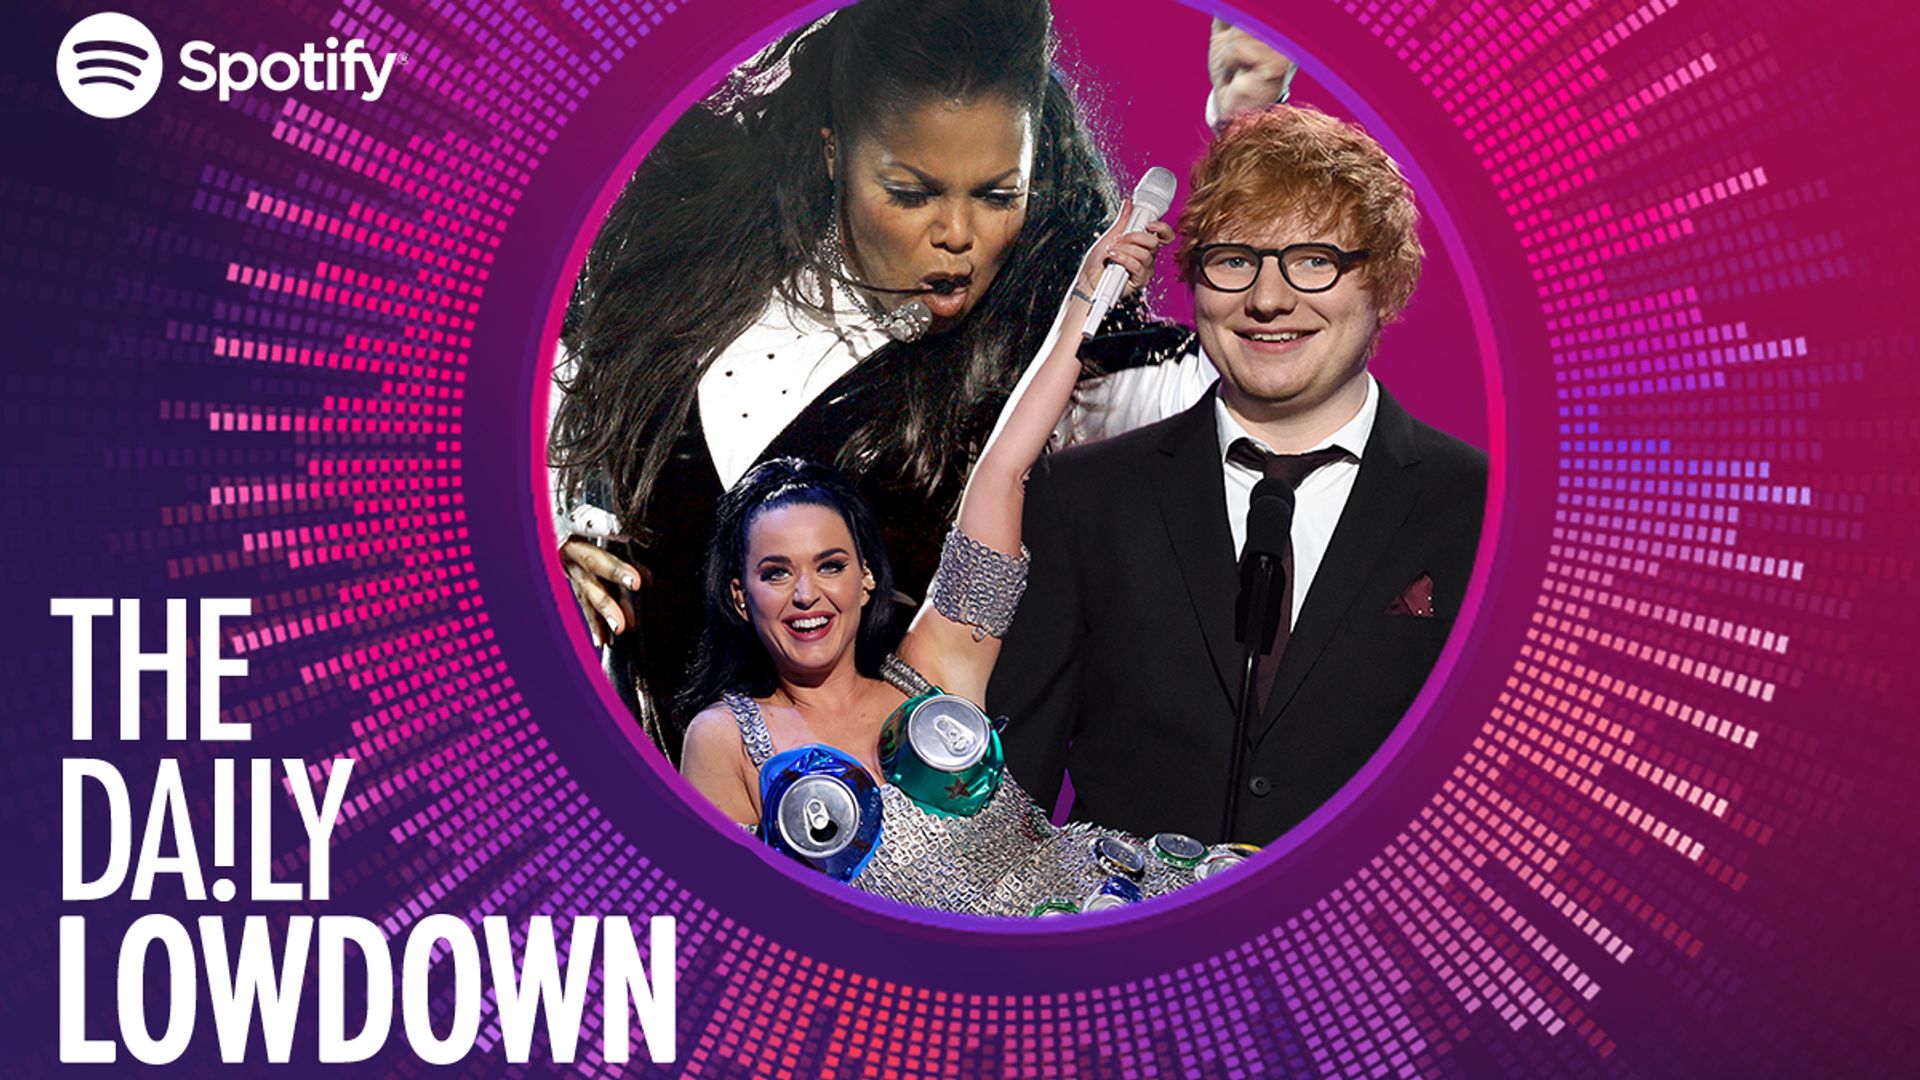 Janet Jackson, Katy Perry, Ed Sheeran in Daily Lowdown logo